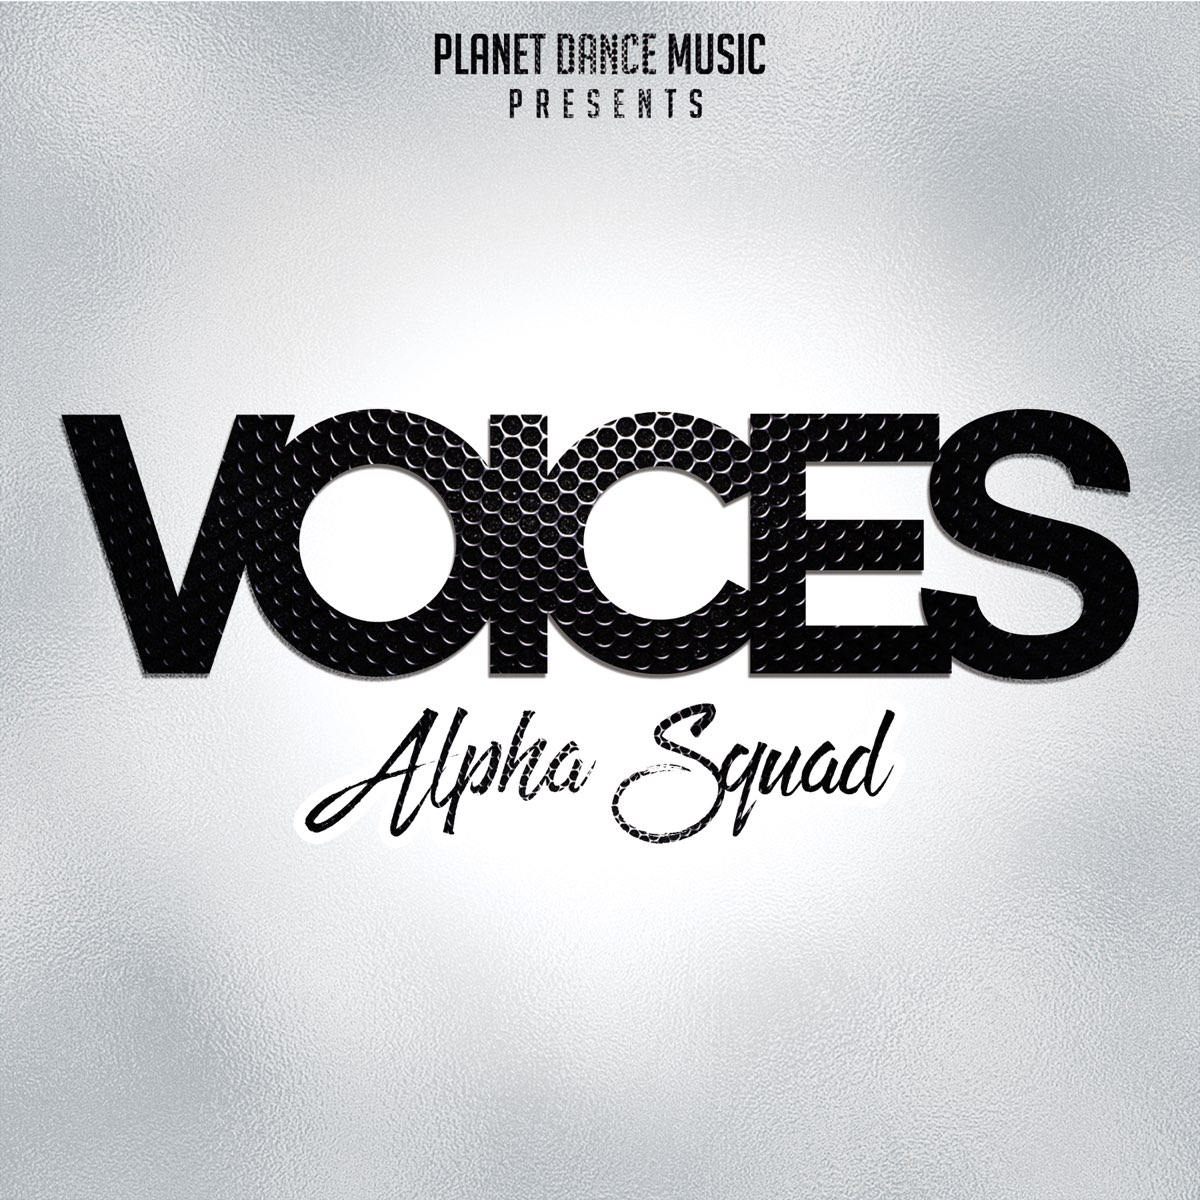 Alpha voice. Alpha Music. Planet Dance Radio: more Music (2019).